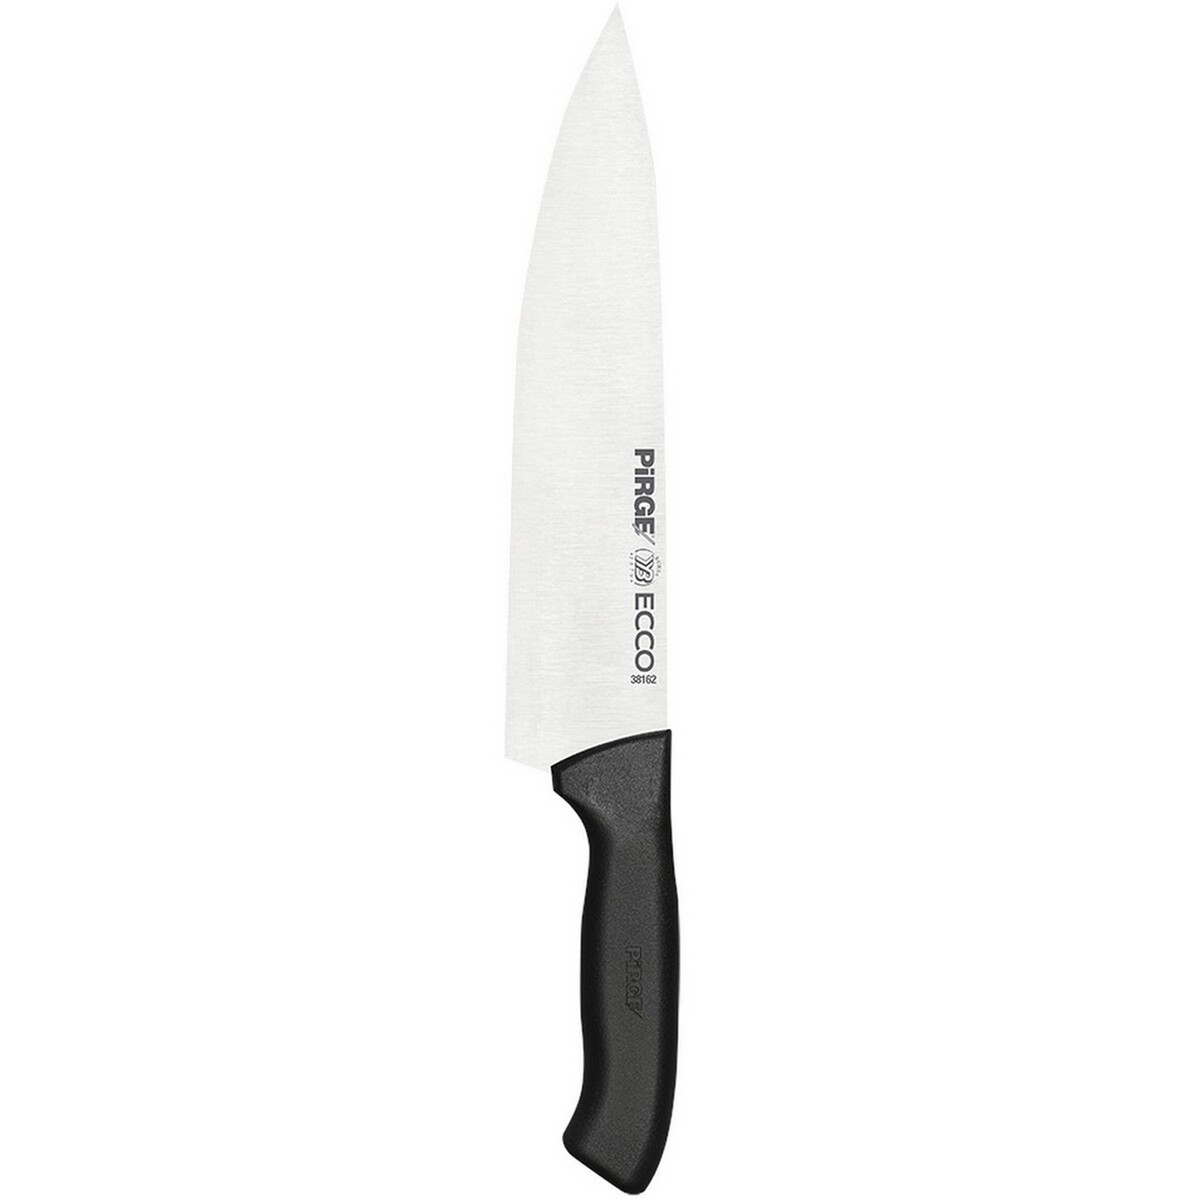 Pirge Cook Knife 38162 23cm